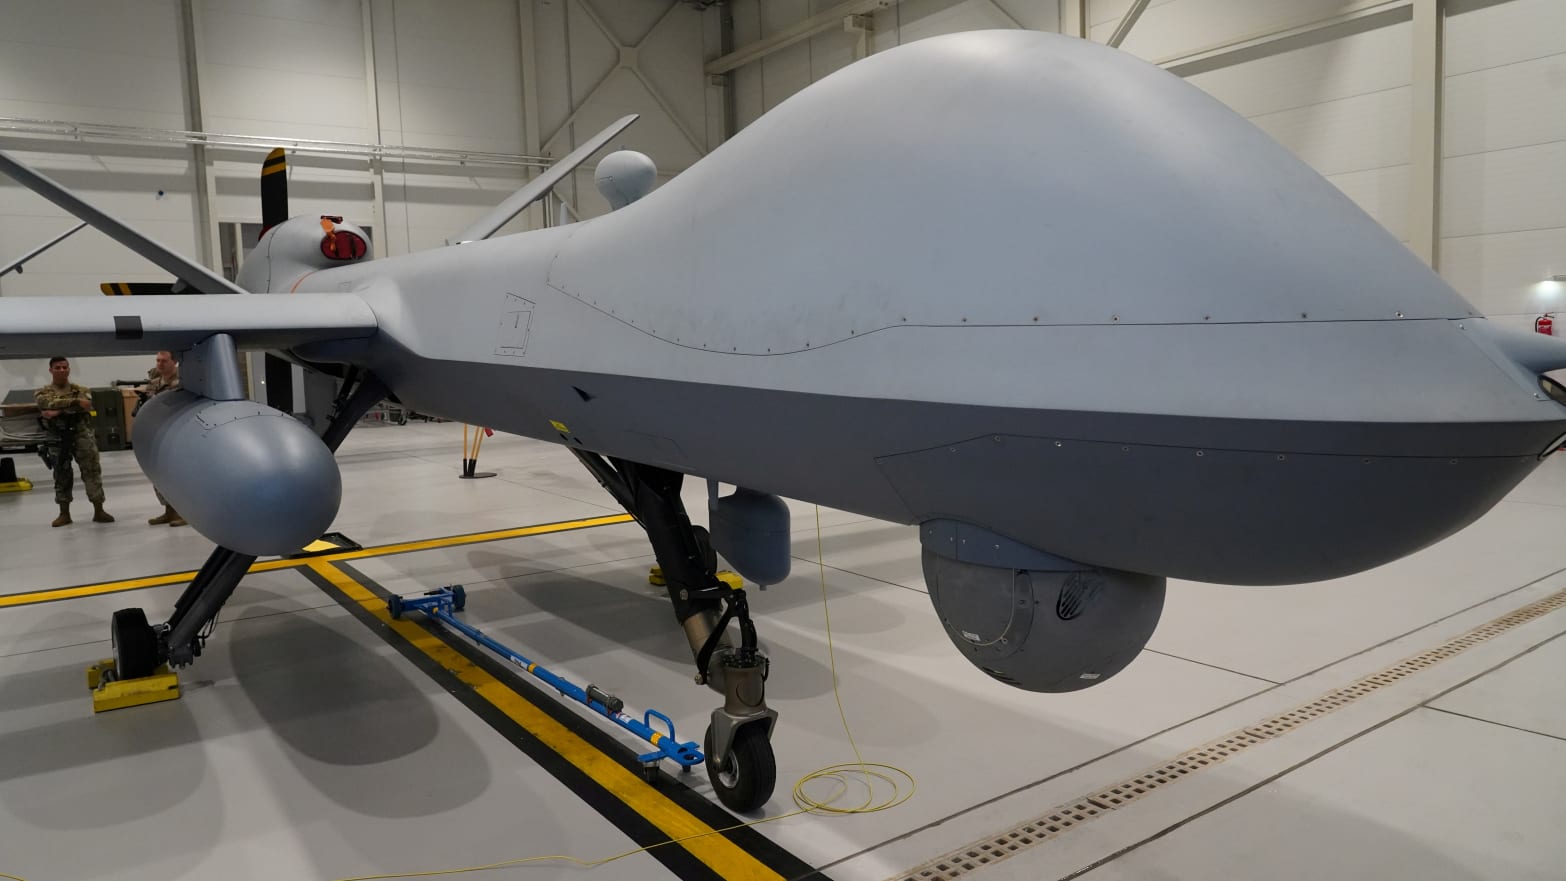 A U.S. Air Force MQ-9 Reaper drone sits in a hanger